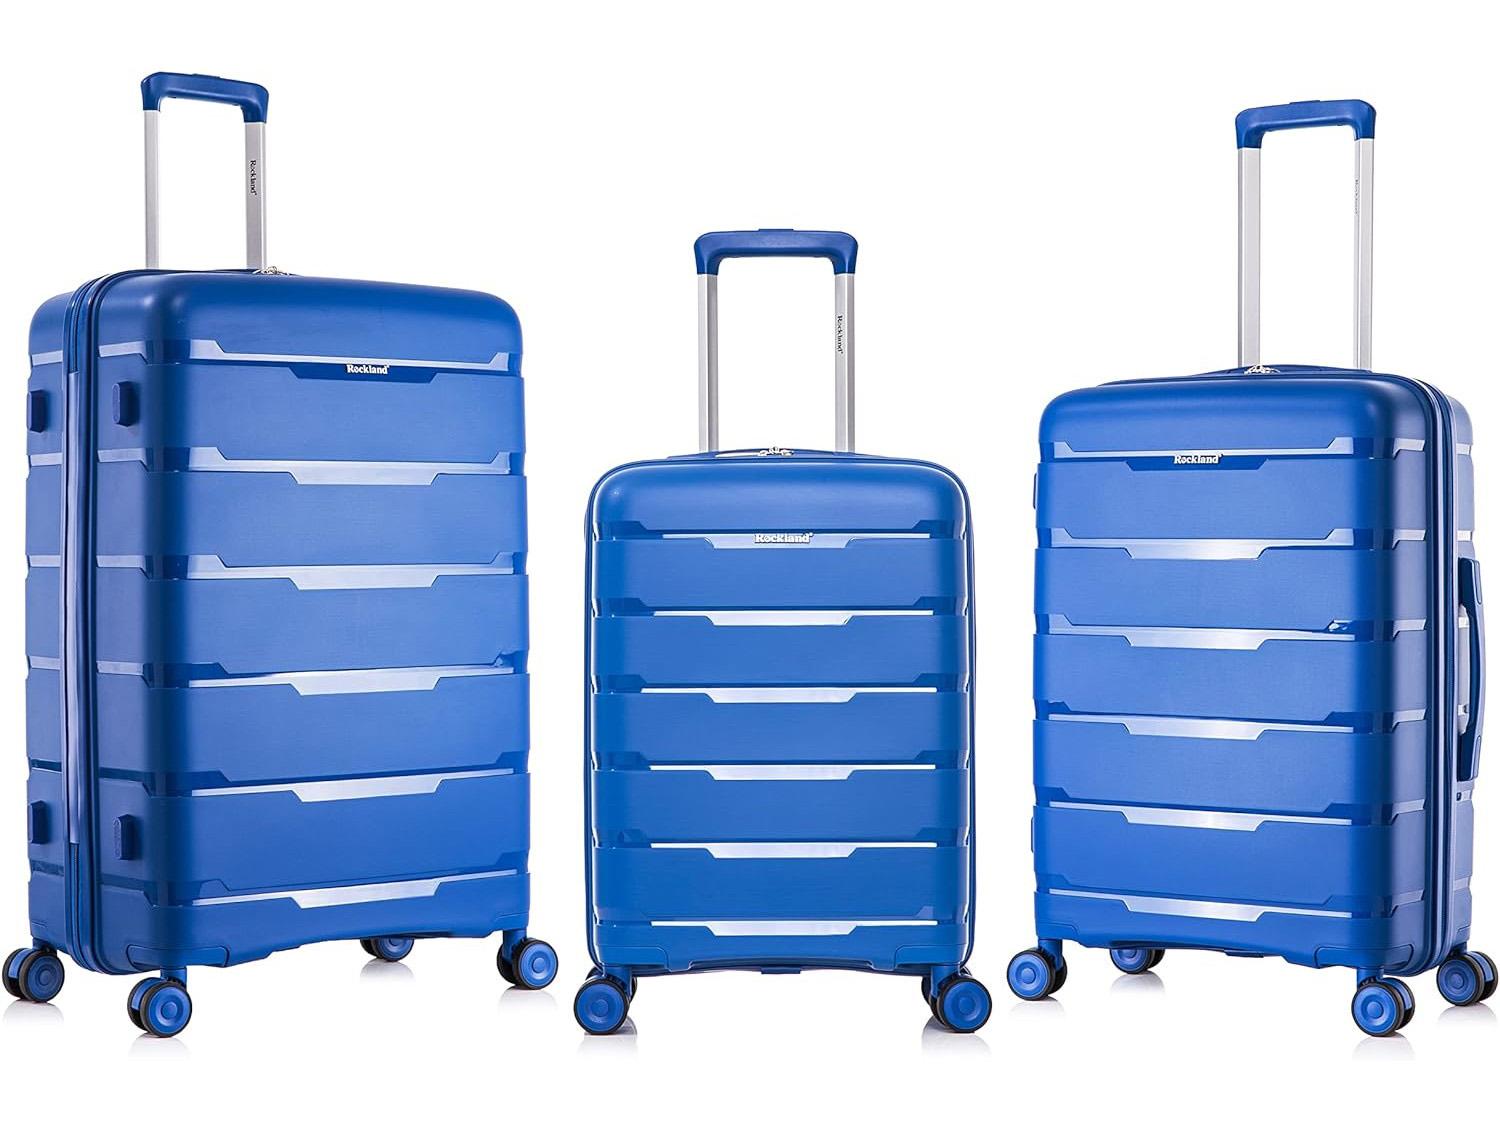 Rockland Pasadena 3 Piece Hardside Luggage Nested Spinner Set for $89 Shipped